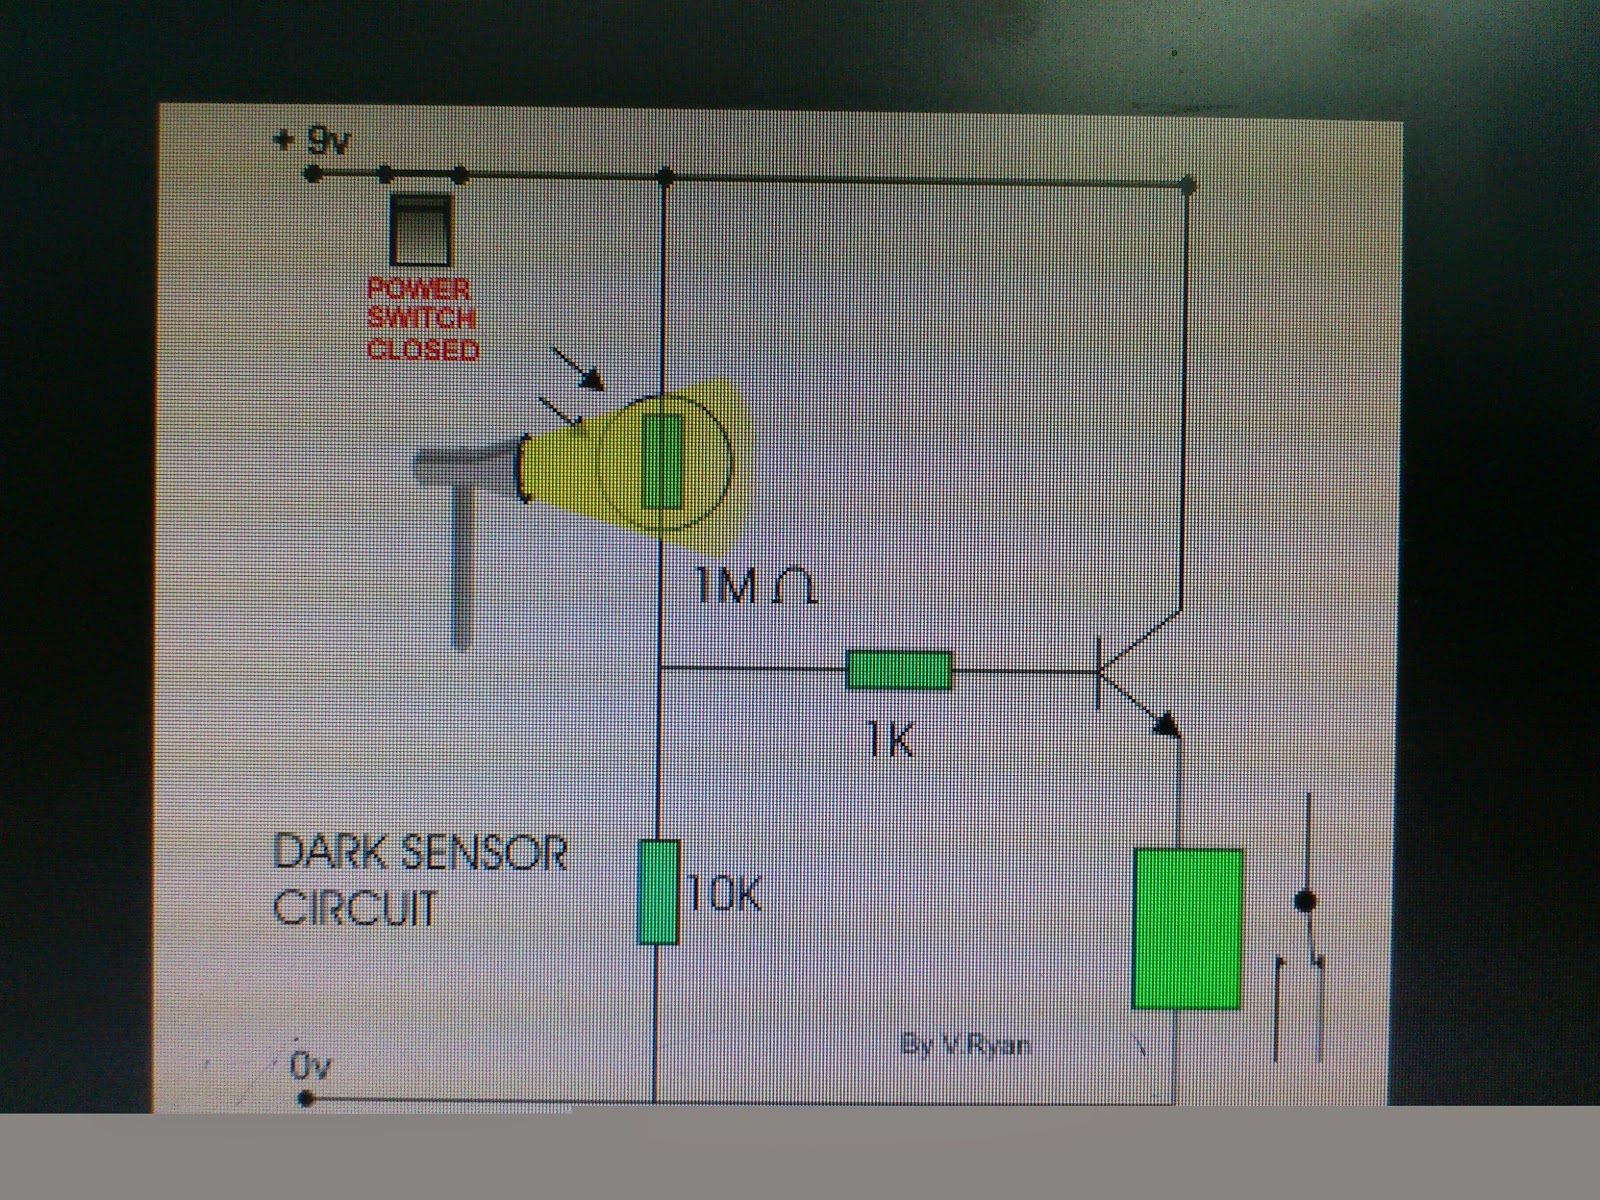 electronic hobby circuits: Dark sensor circuit